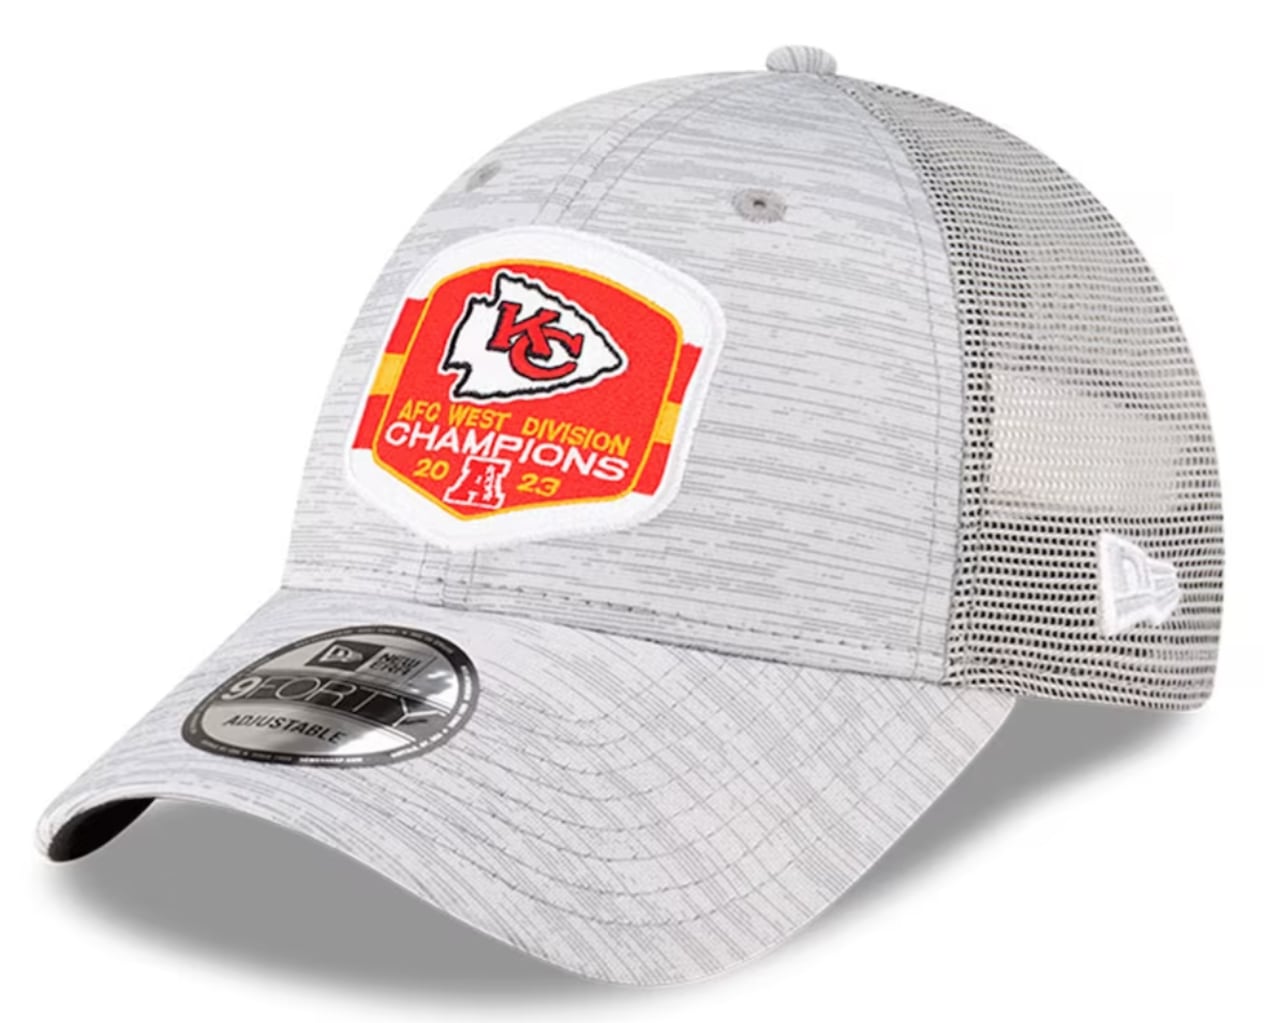 Kansas City Chiefs hat